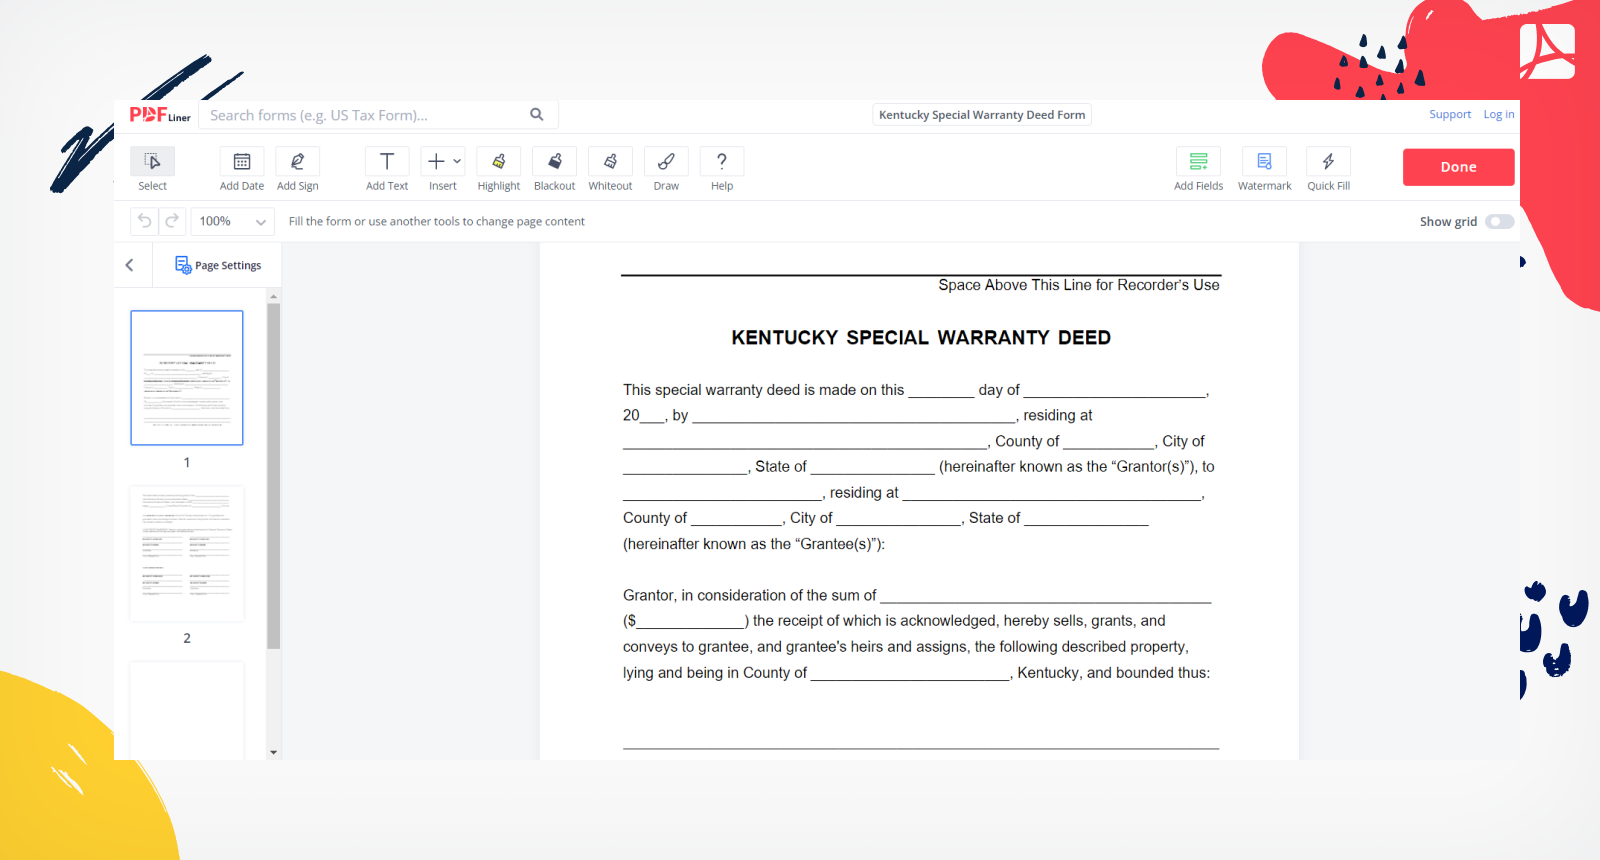 Kentucky Special Warranty Deed Form Screenshot